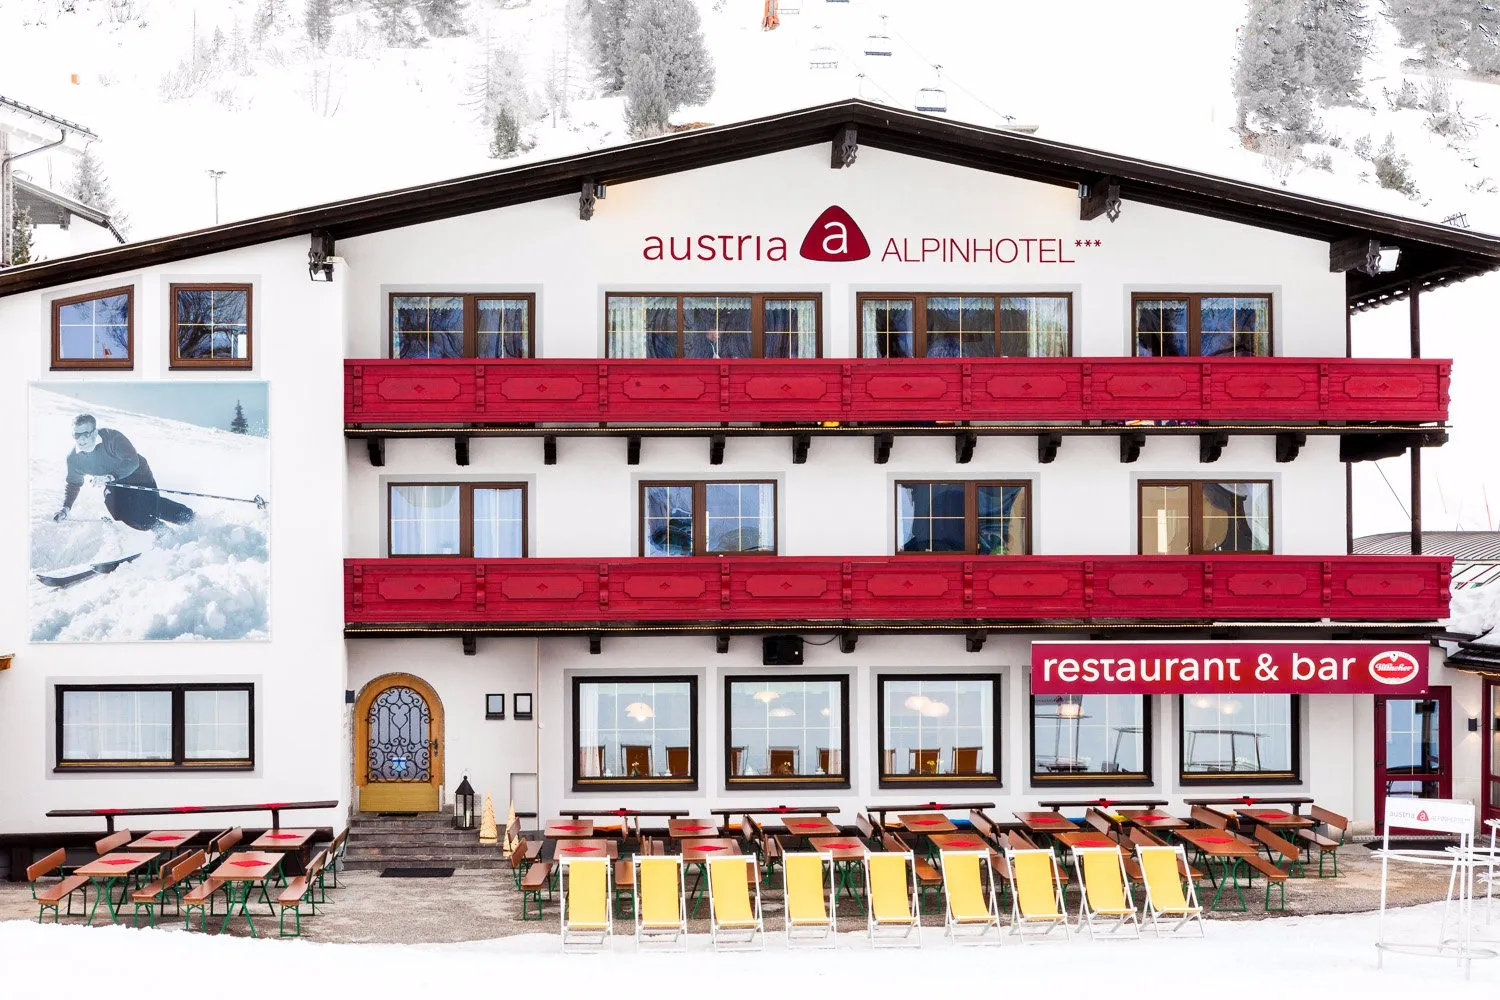 Building hotel Austria Alpinhotel